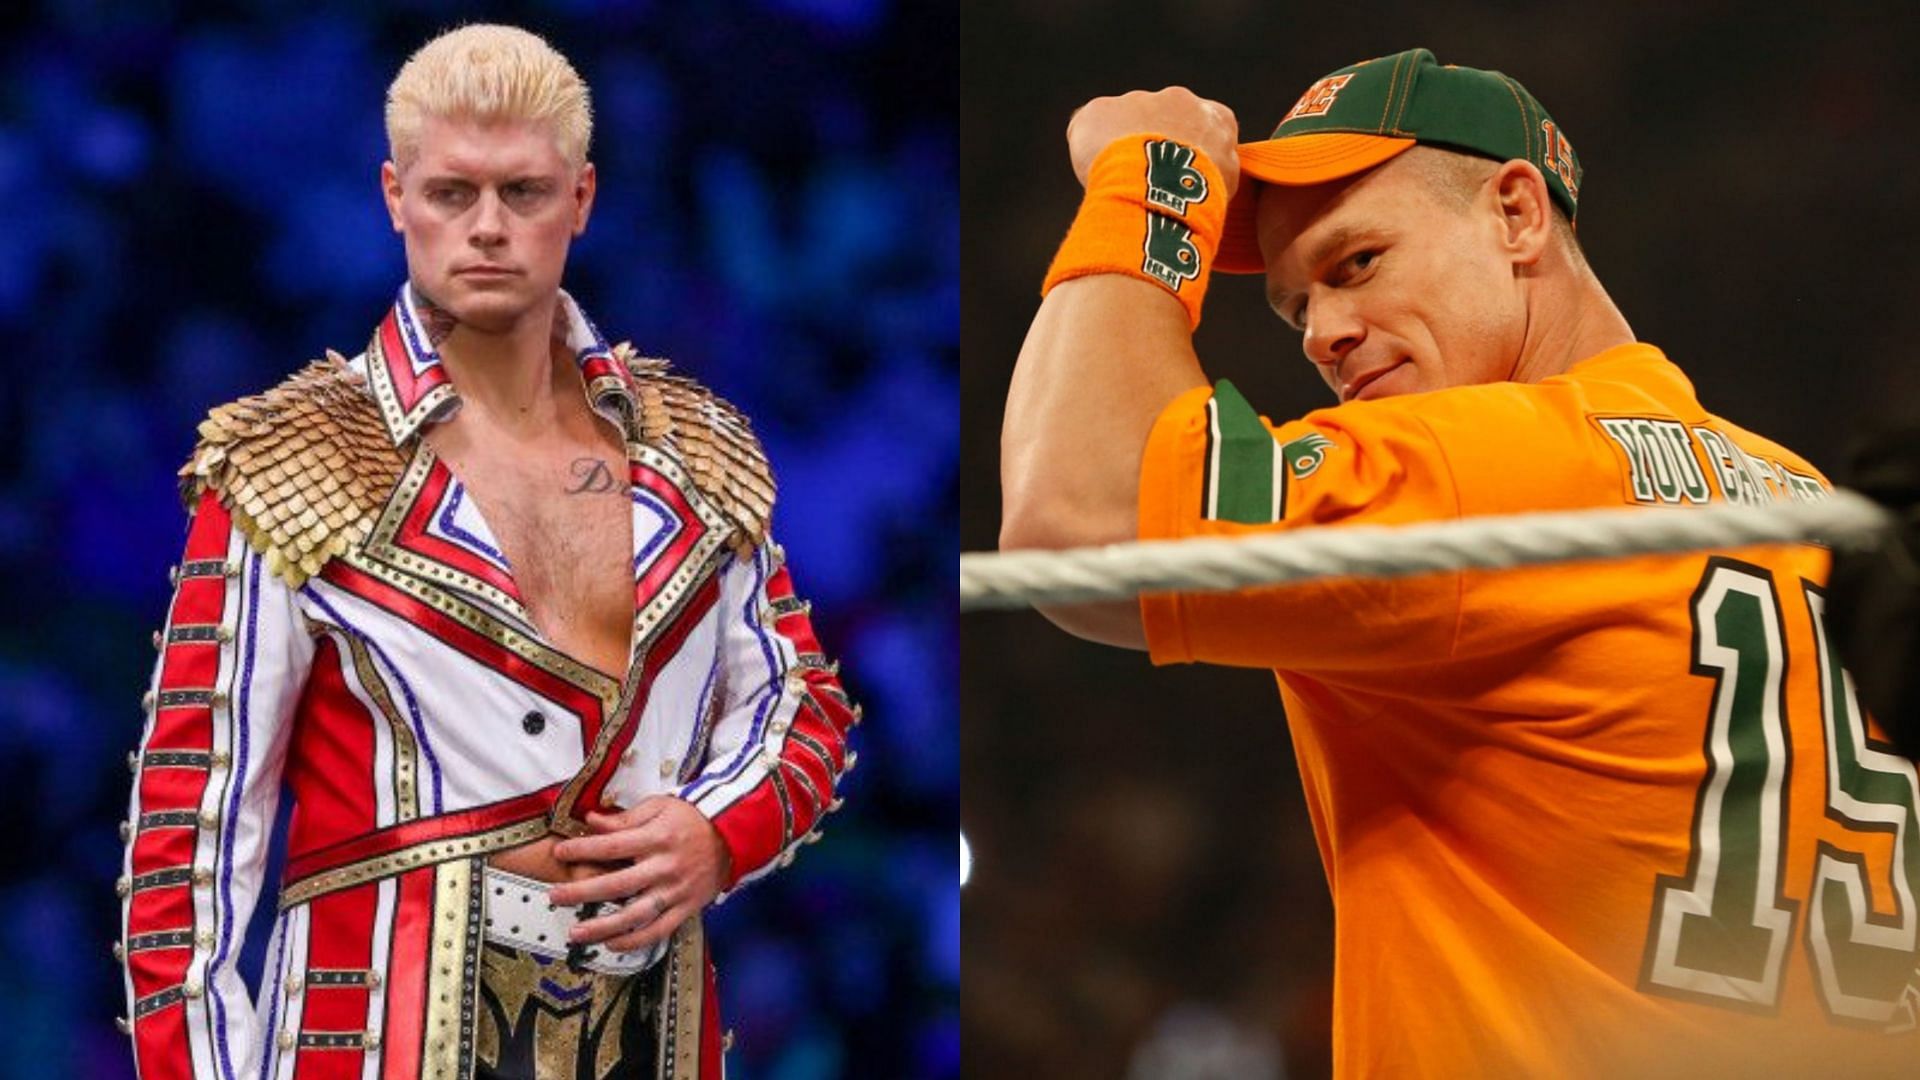 Cody Rhodes (left) and WWE legend John Cena (right)